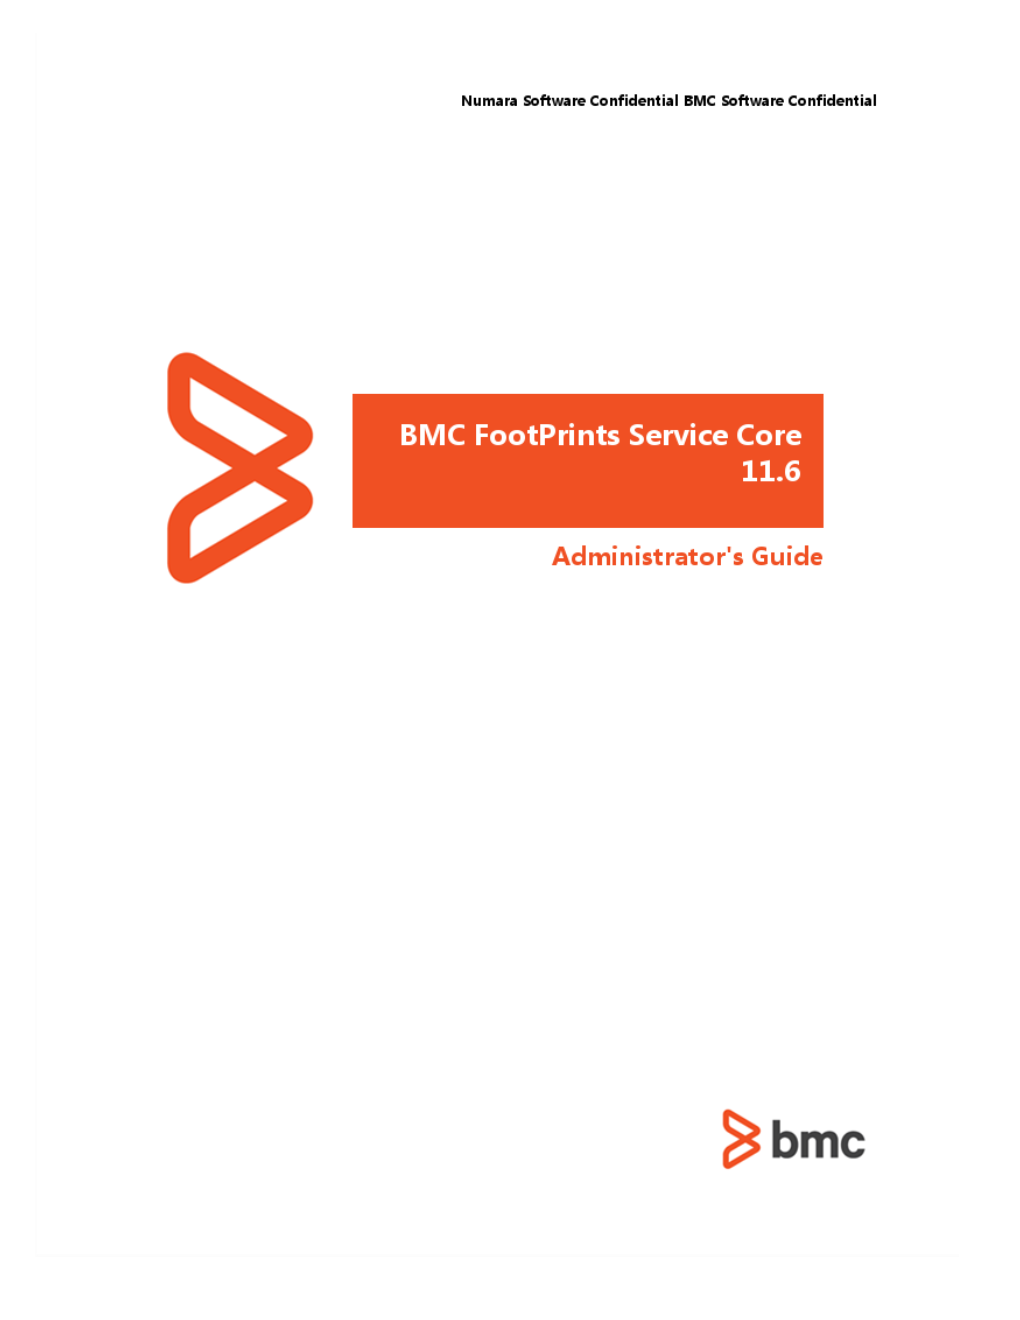 BMC Footprints Service Core Administrators Guide 11.6